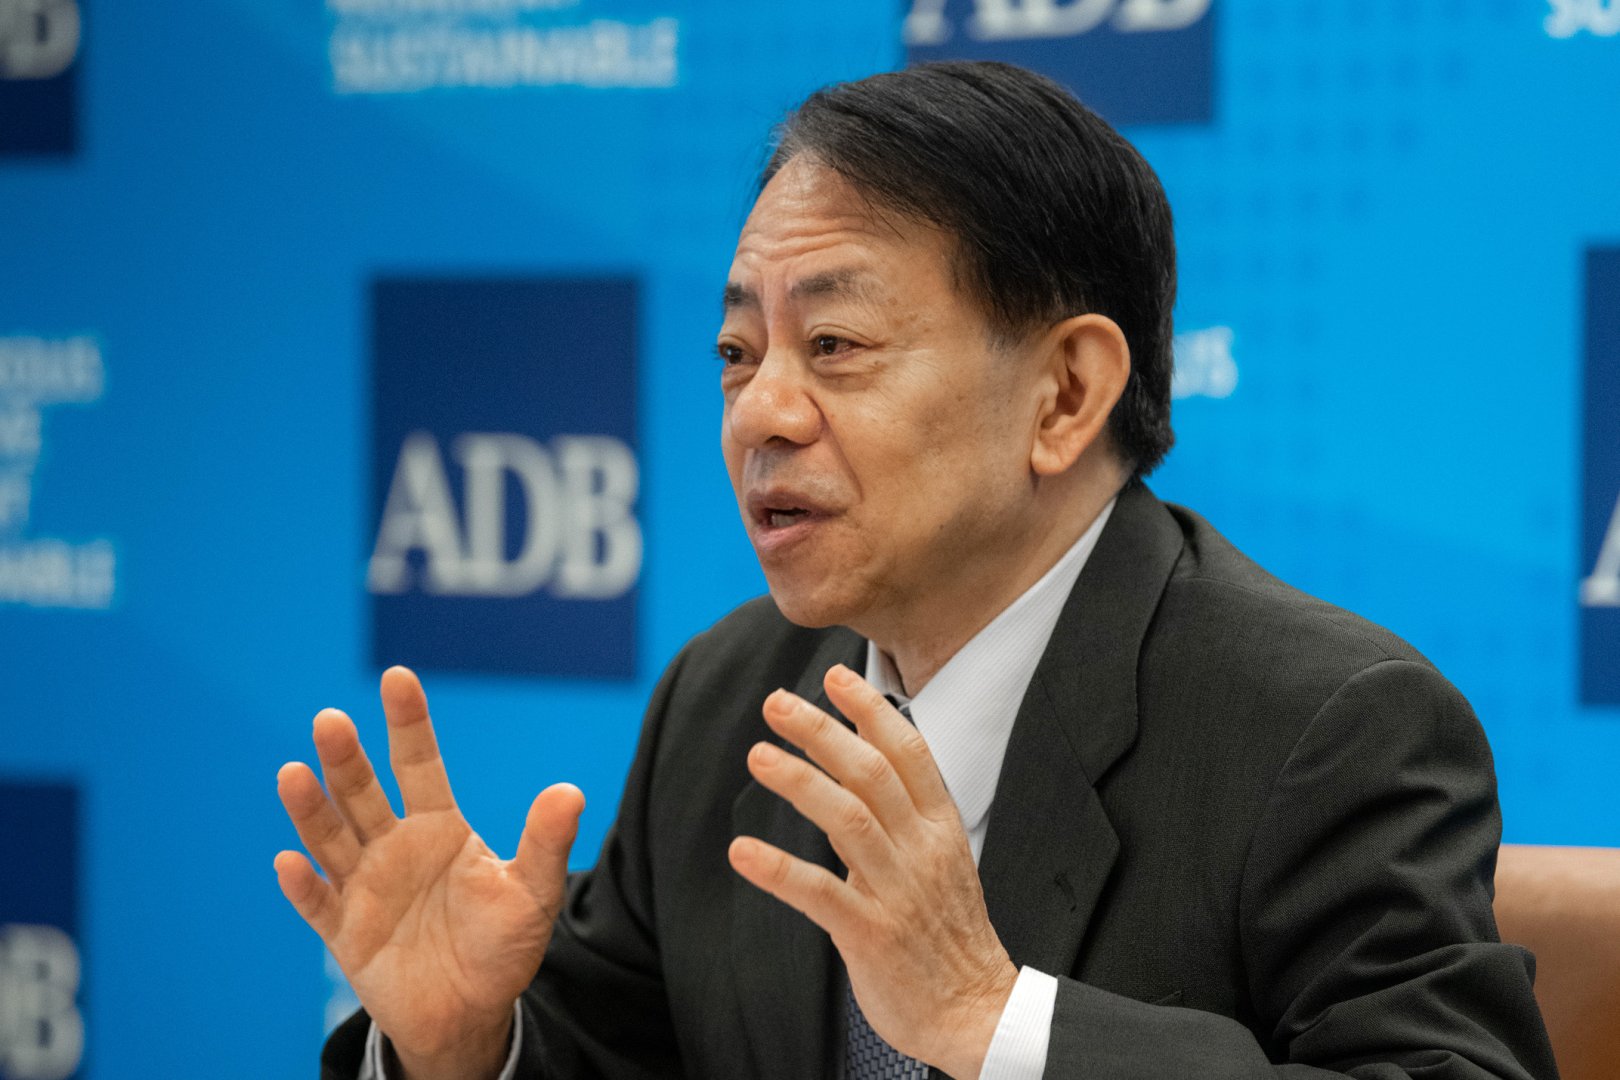 We must not delay in addressing climate change - Masatsugu Asakawa